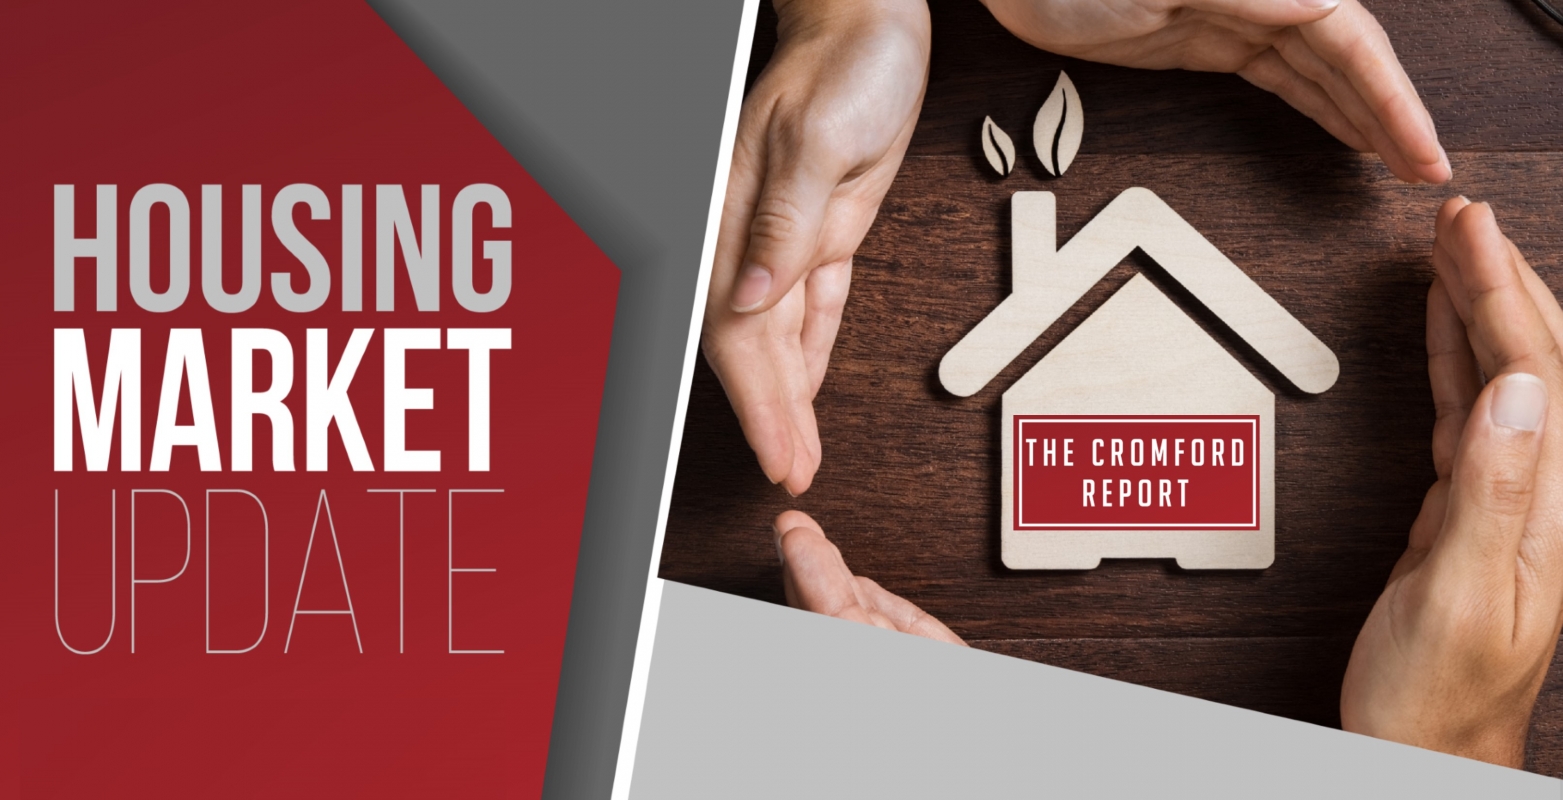 Housing Market Update: The Cromford Report